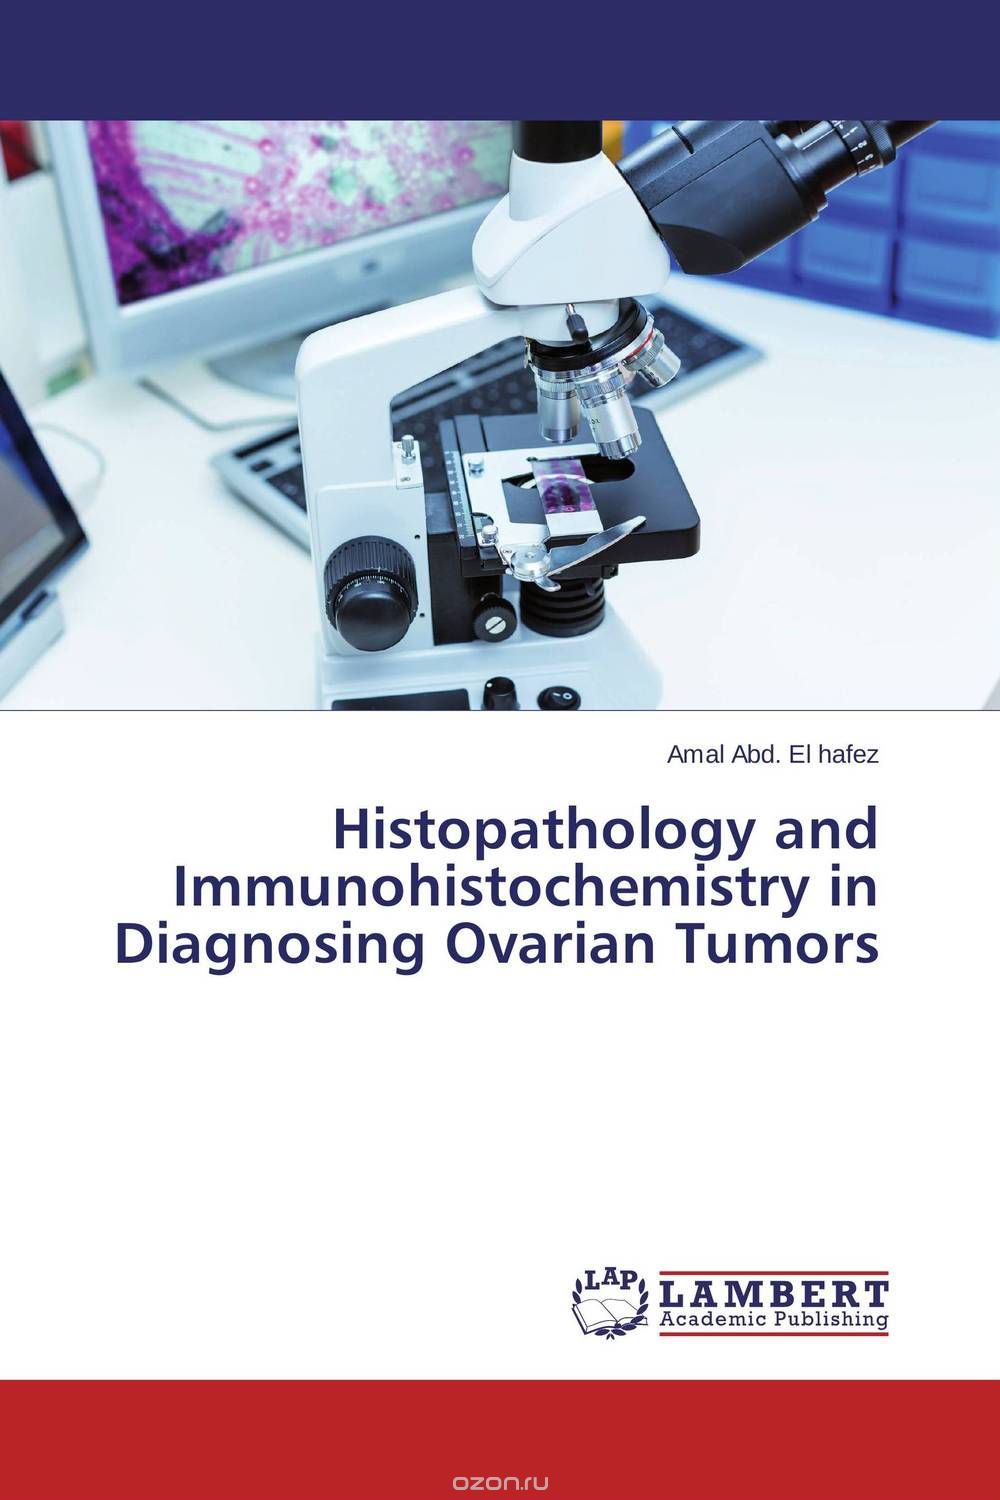 Скачать книгу "Histopathology and Immunohistochemistry in Diagnosing Ovarian Tumors"